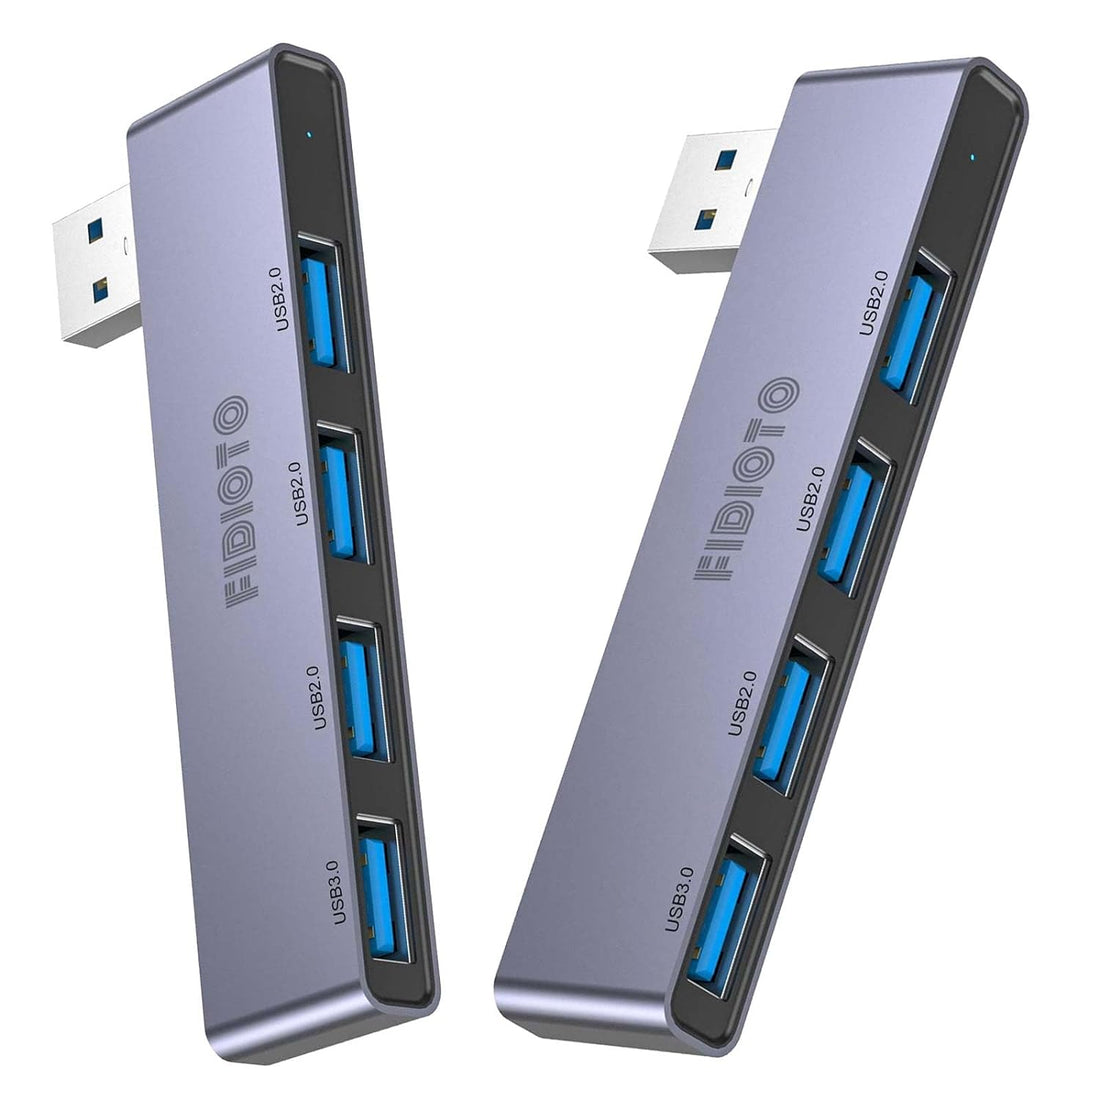 USB Hub 2Pack Right Model, Fidioto 4-Port USB Hub(1 * 3.0 Port, 3 * 2.0 Port) USB Splitter USB Expander for Laptop, Xbox, Flash Drive, HDD, Console, Printer, Camera,Keyborad, Mouse